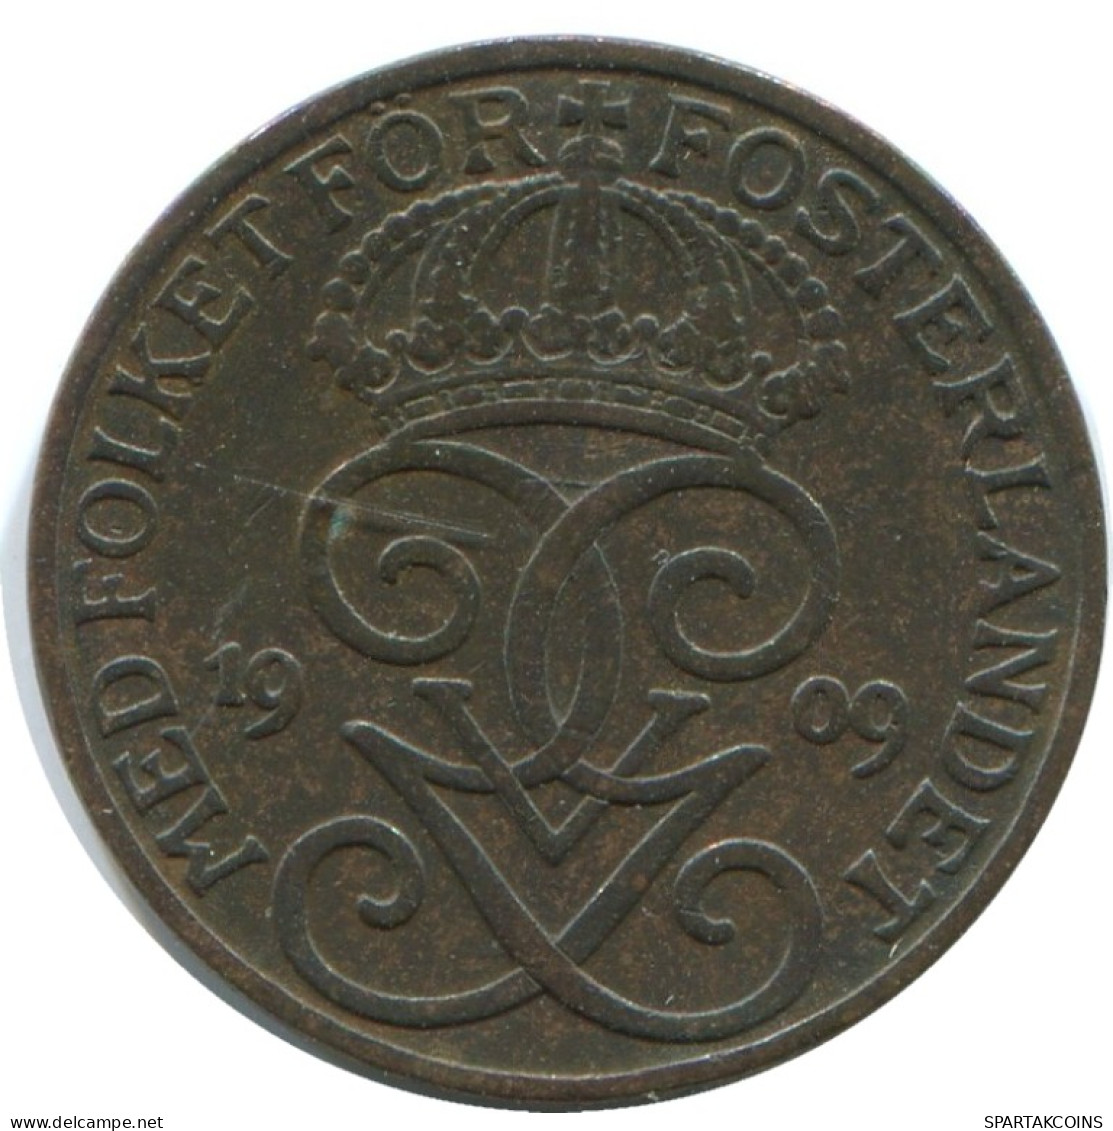 1 ORE 1909 SWEDEN Coin #AD217.2.U.A - Sweden